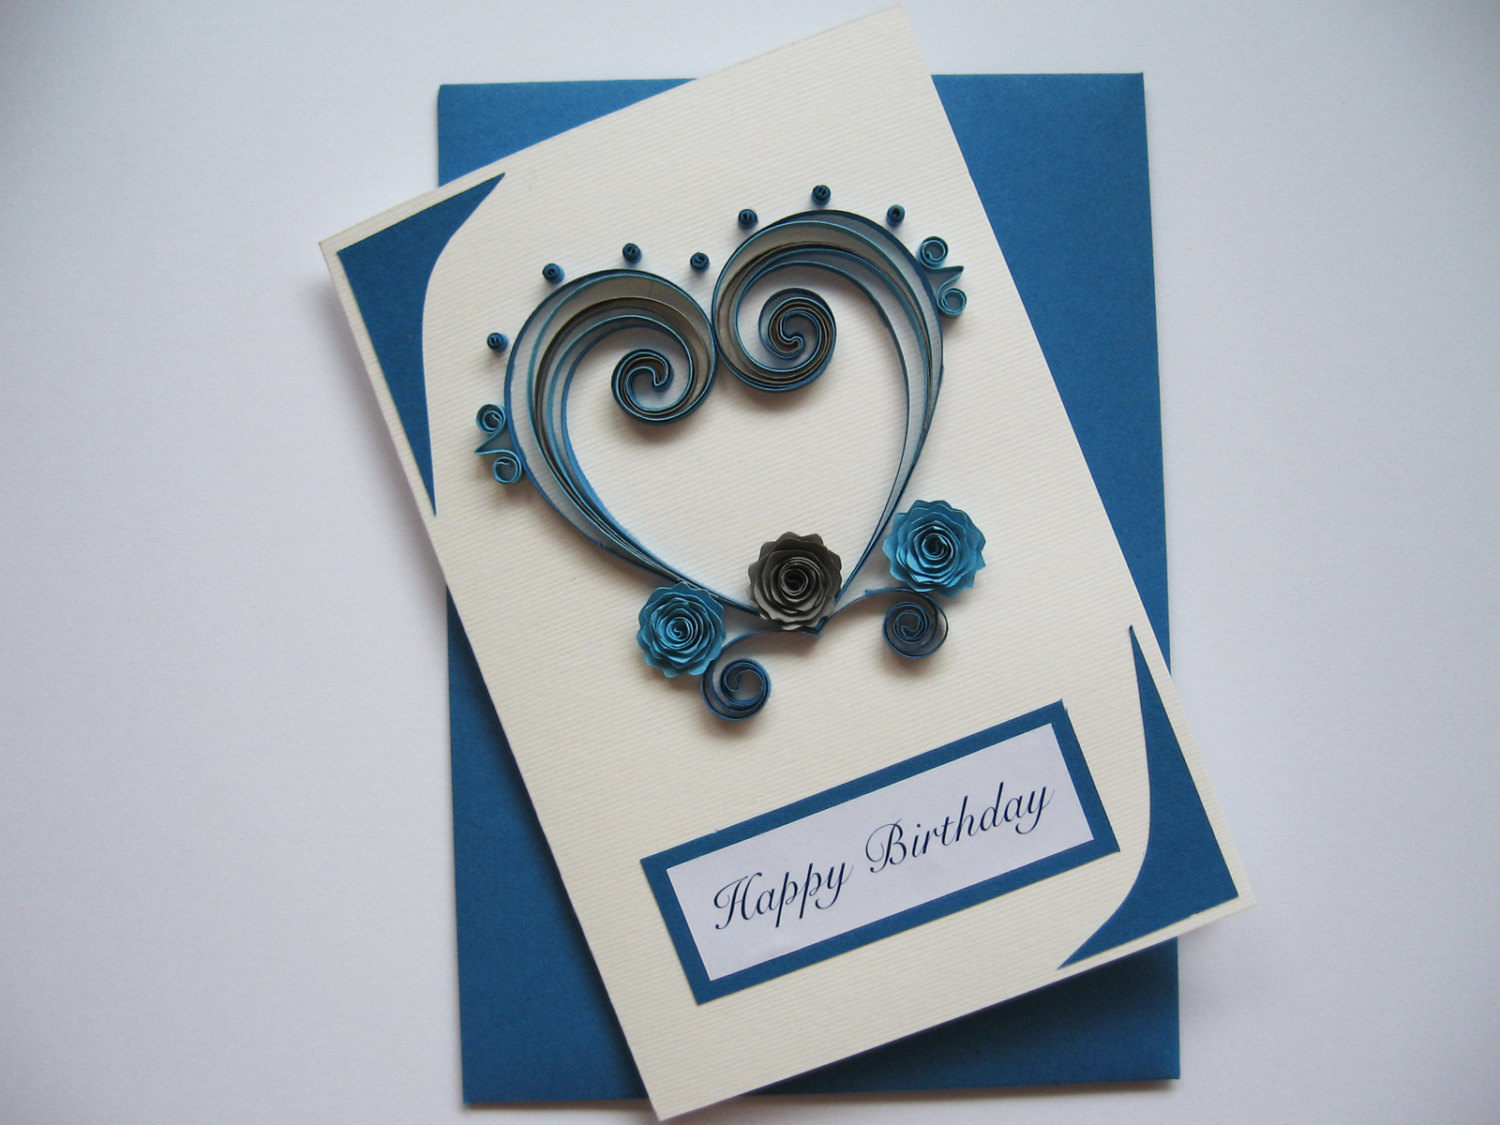 Handmade Birthday Cards For Men Ideas Handmade Greeting Card Ideas For Boyfriend Handmade Birthday Card